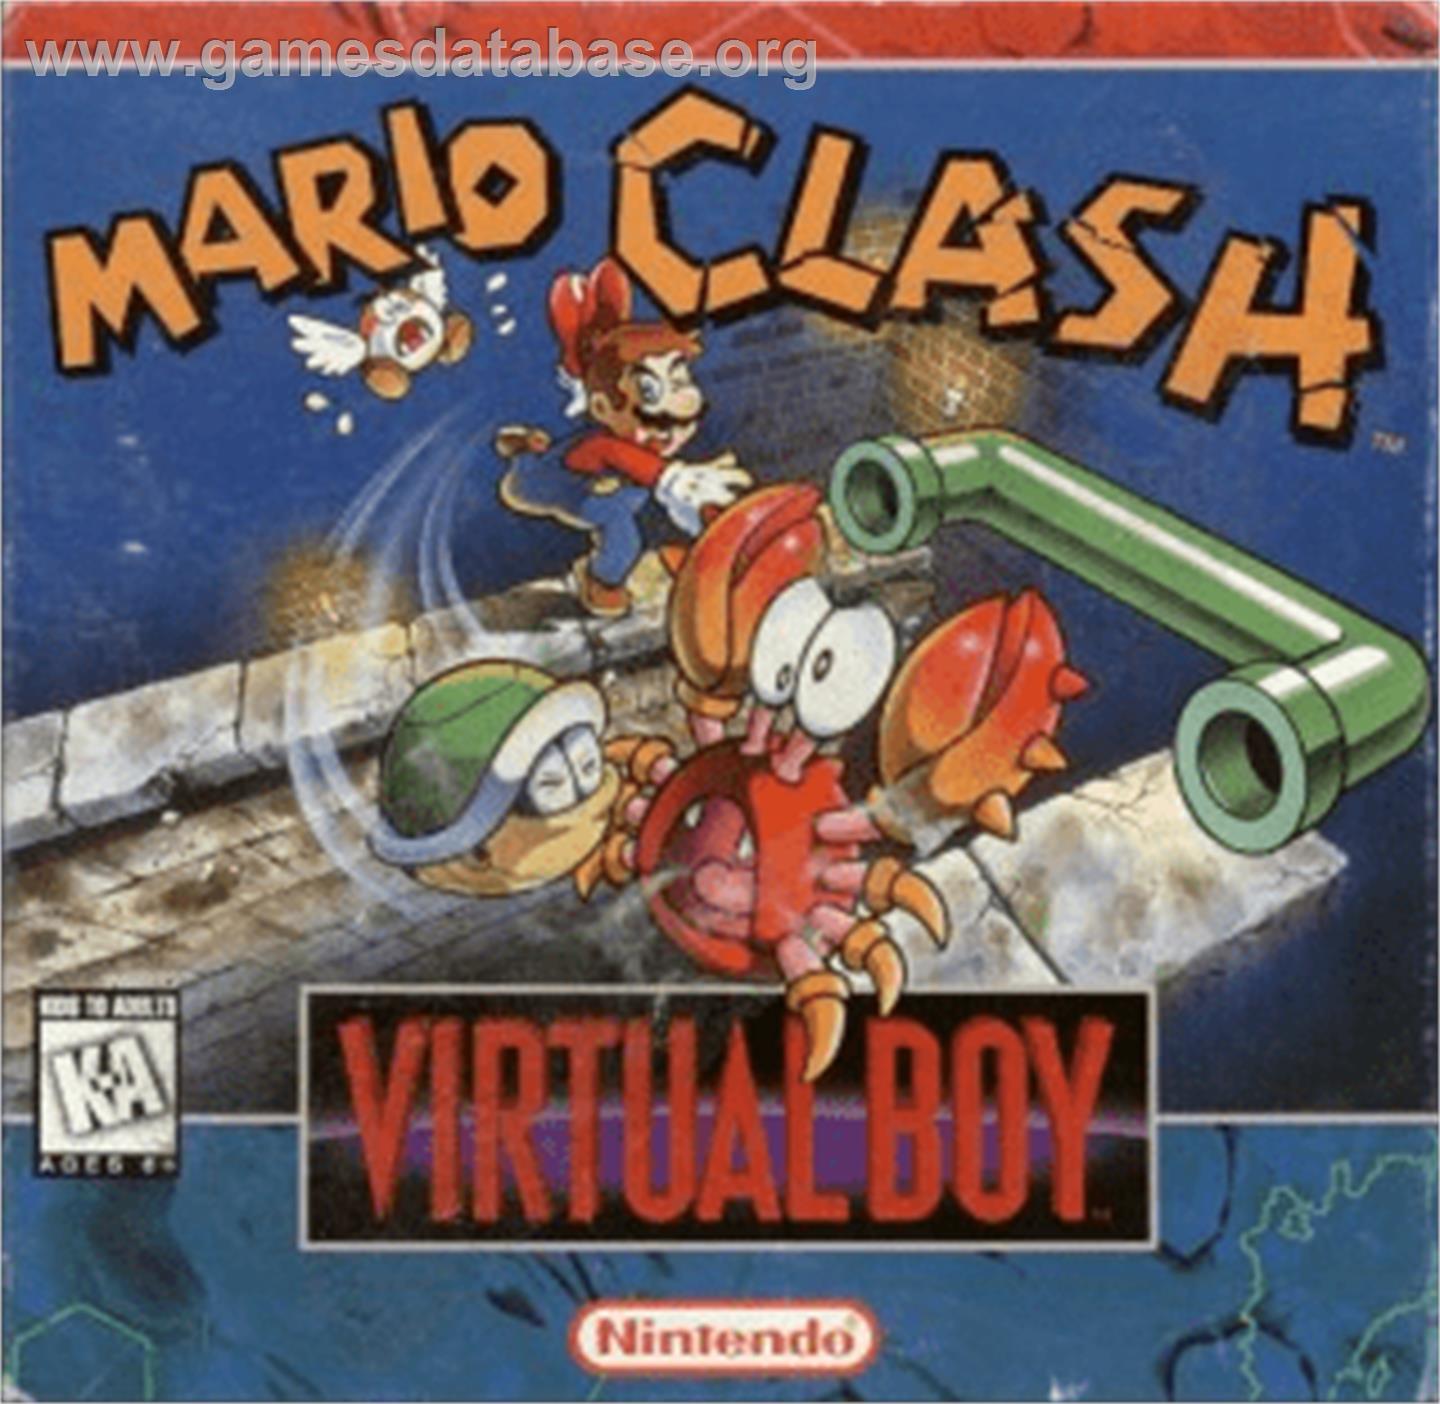 Mario Clash - Nintendo Virtual Boy - Artwork - Box